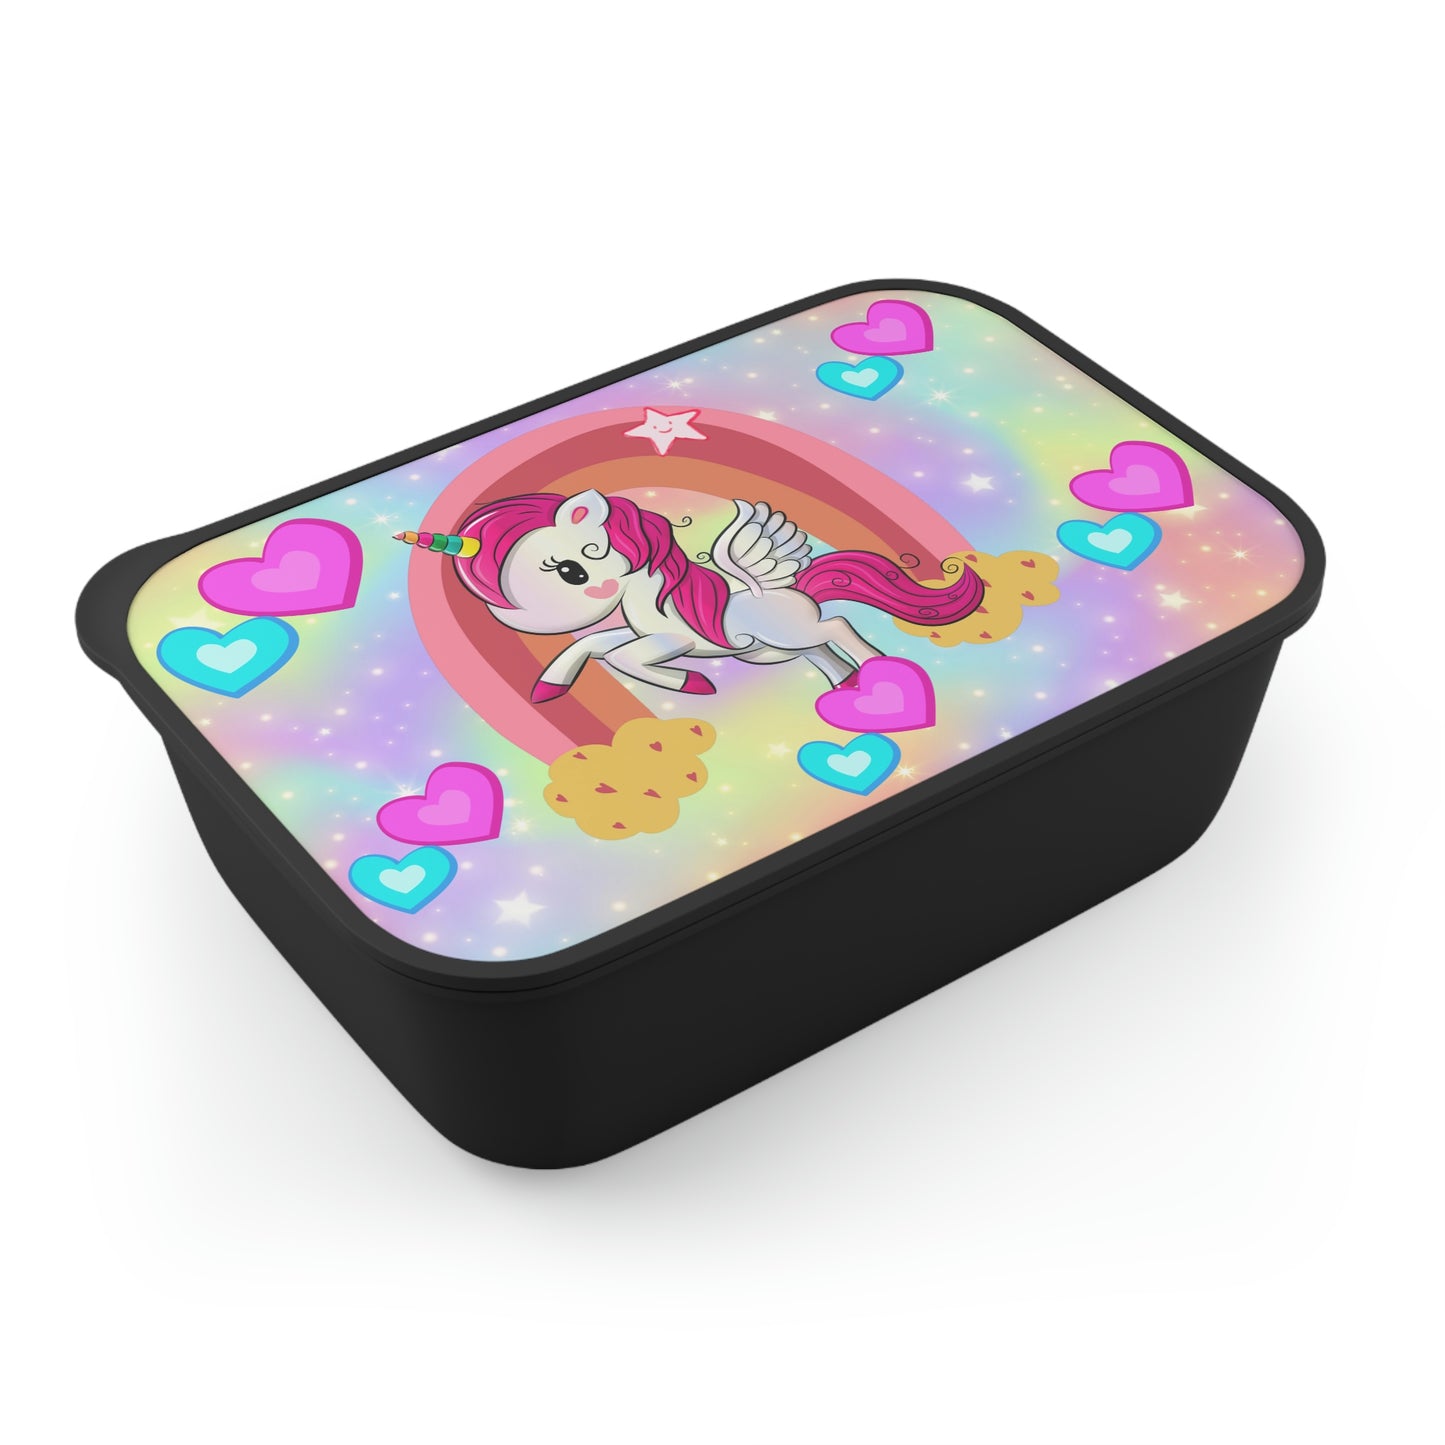 Unicorn Kids Lunch Box / " PLA Bento Box " with Band and Utensils